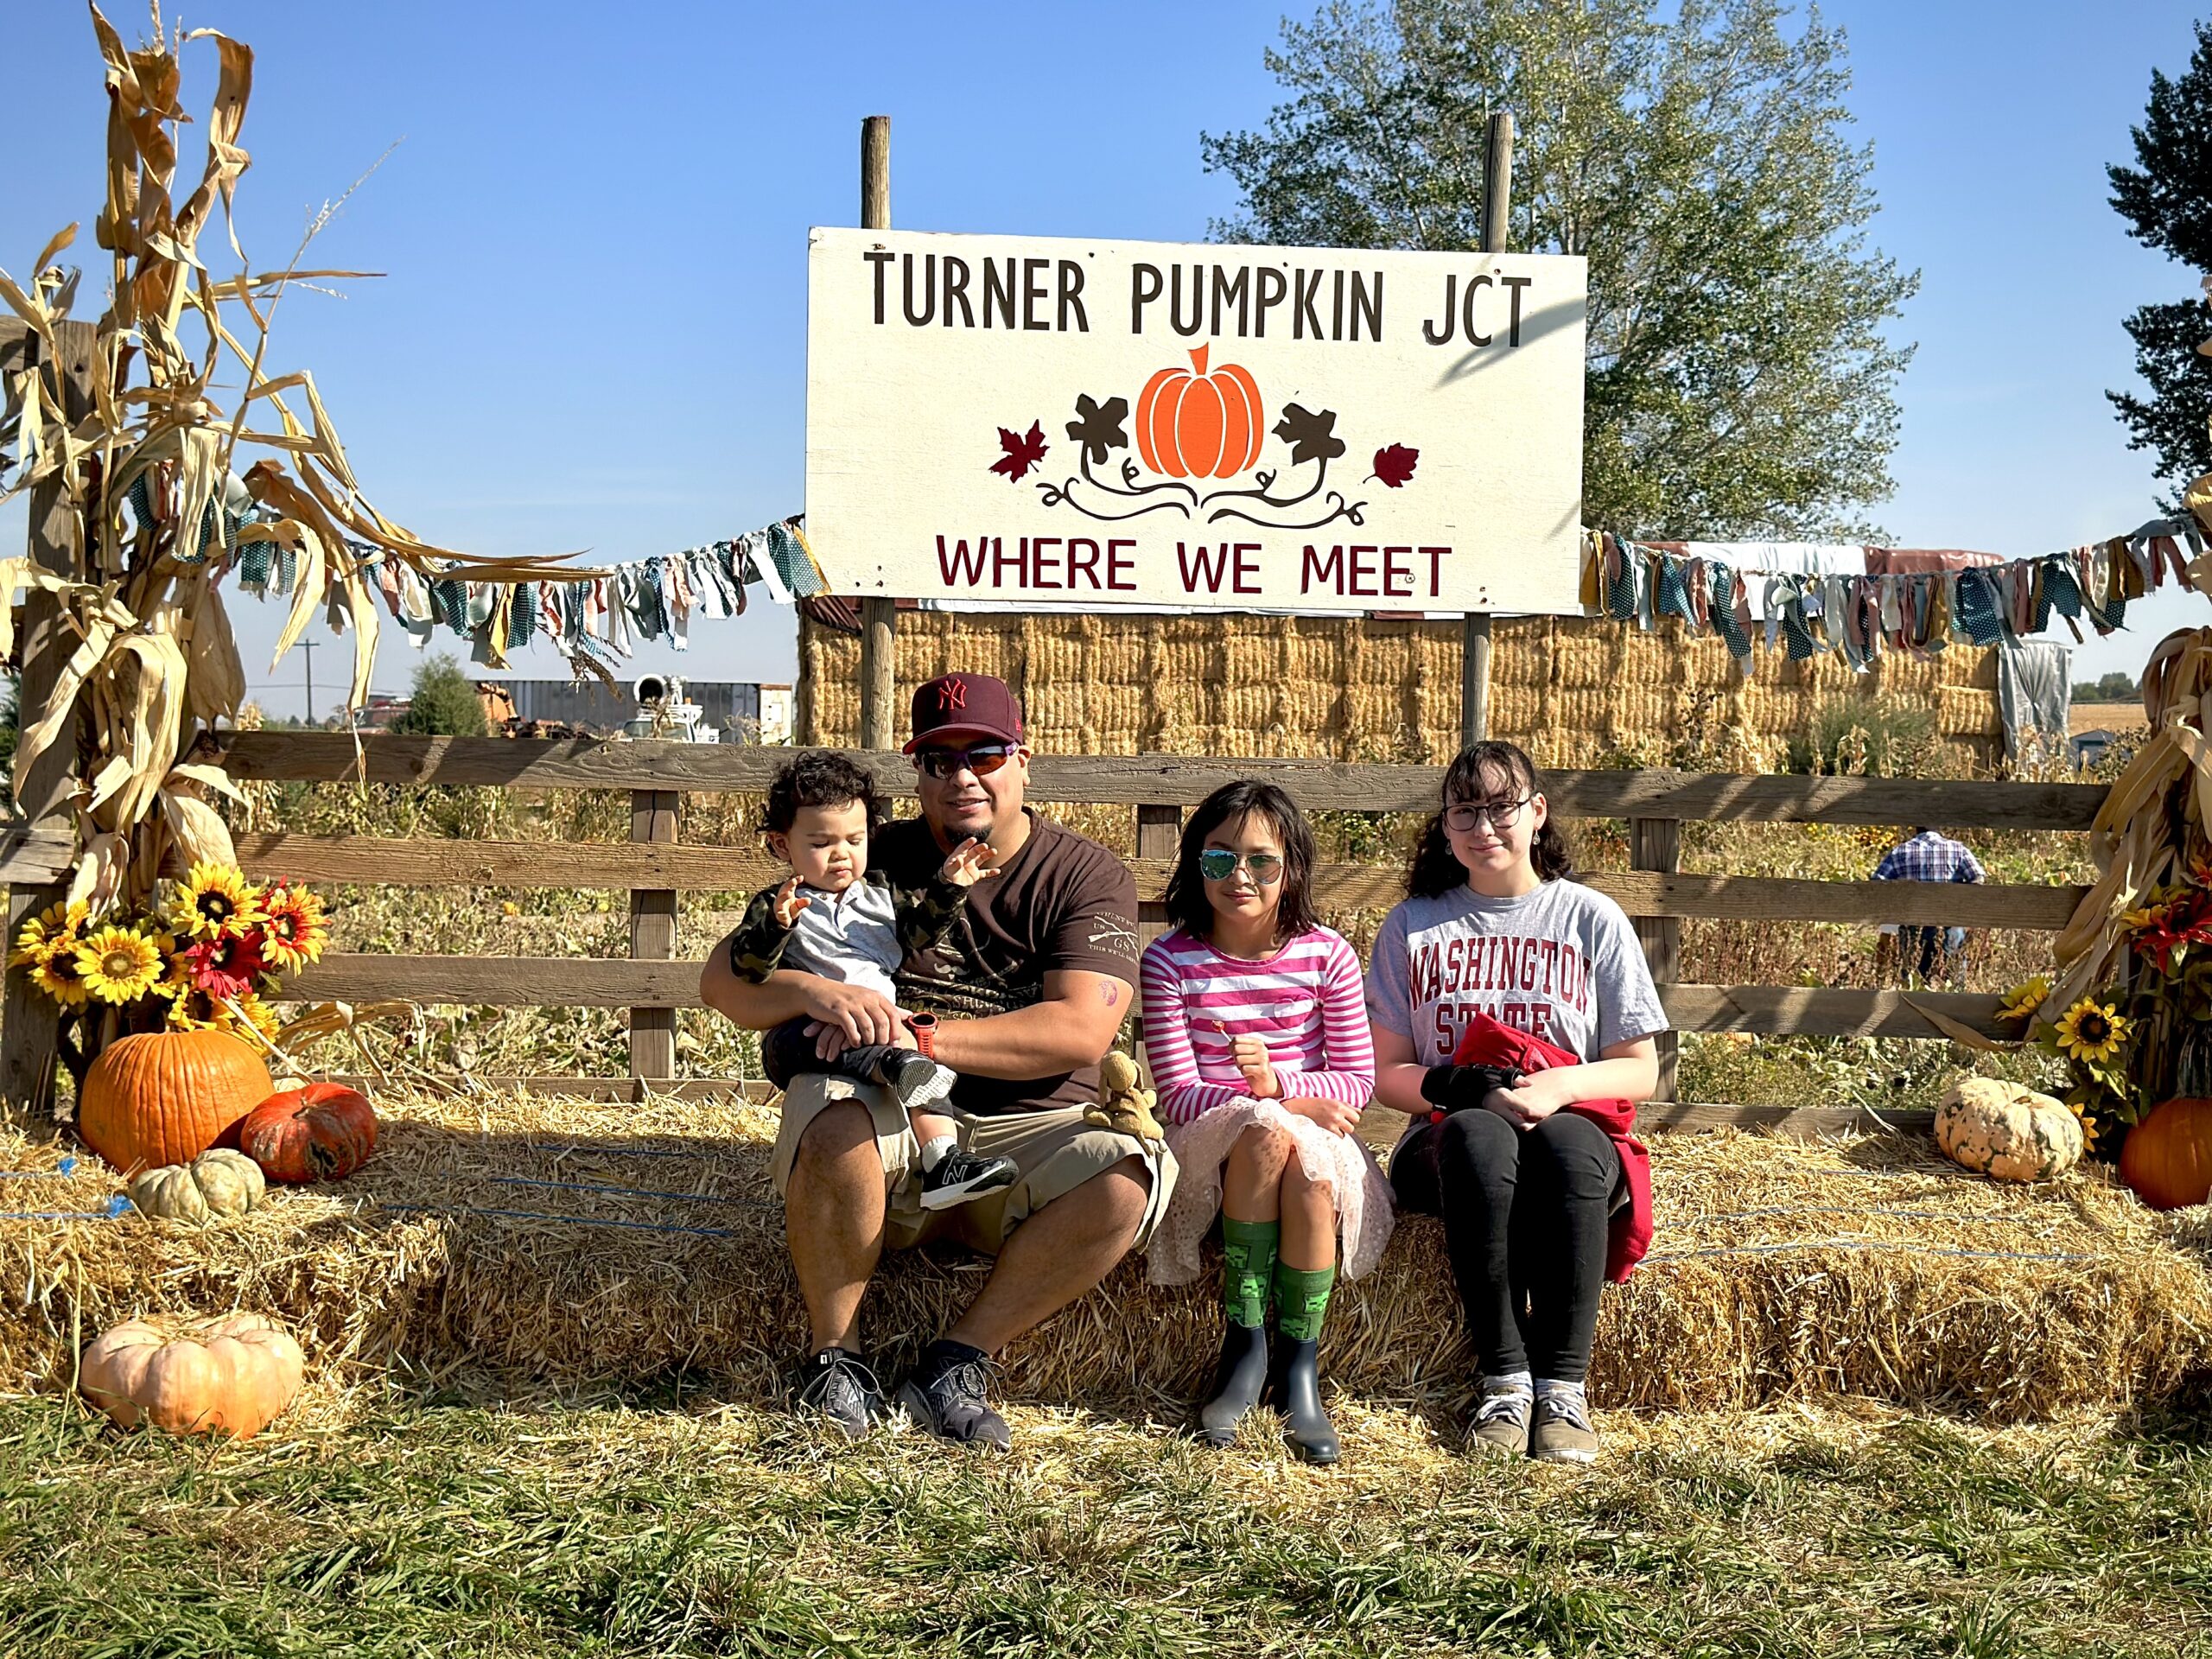 Turner pumpkin junction -119